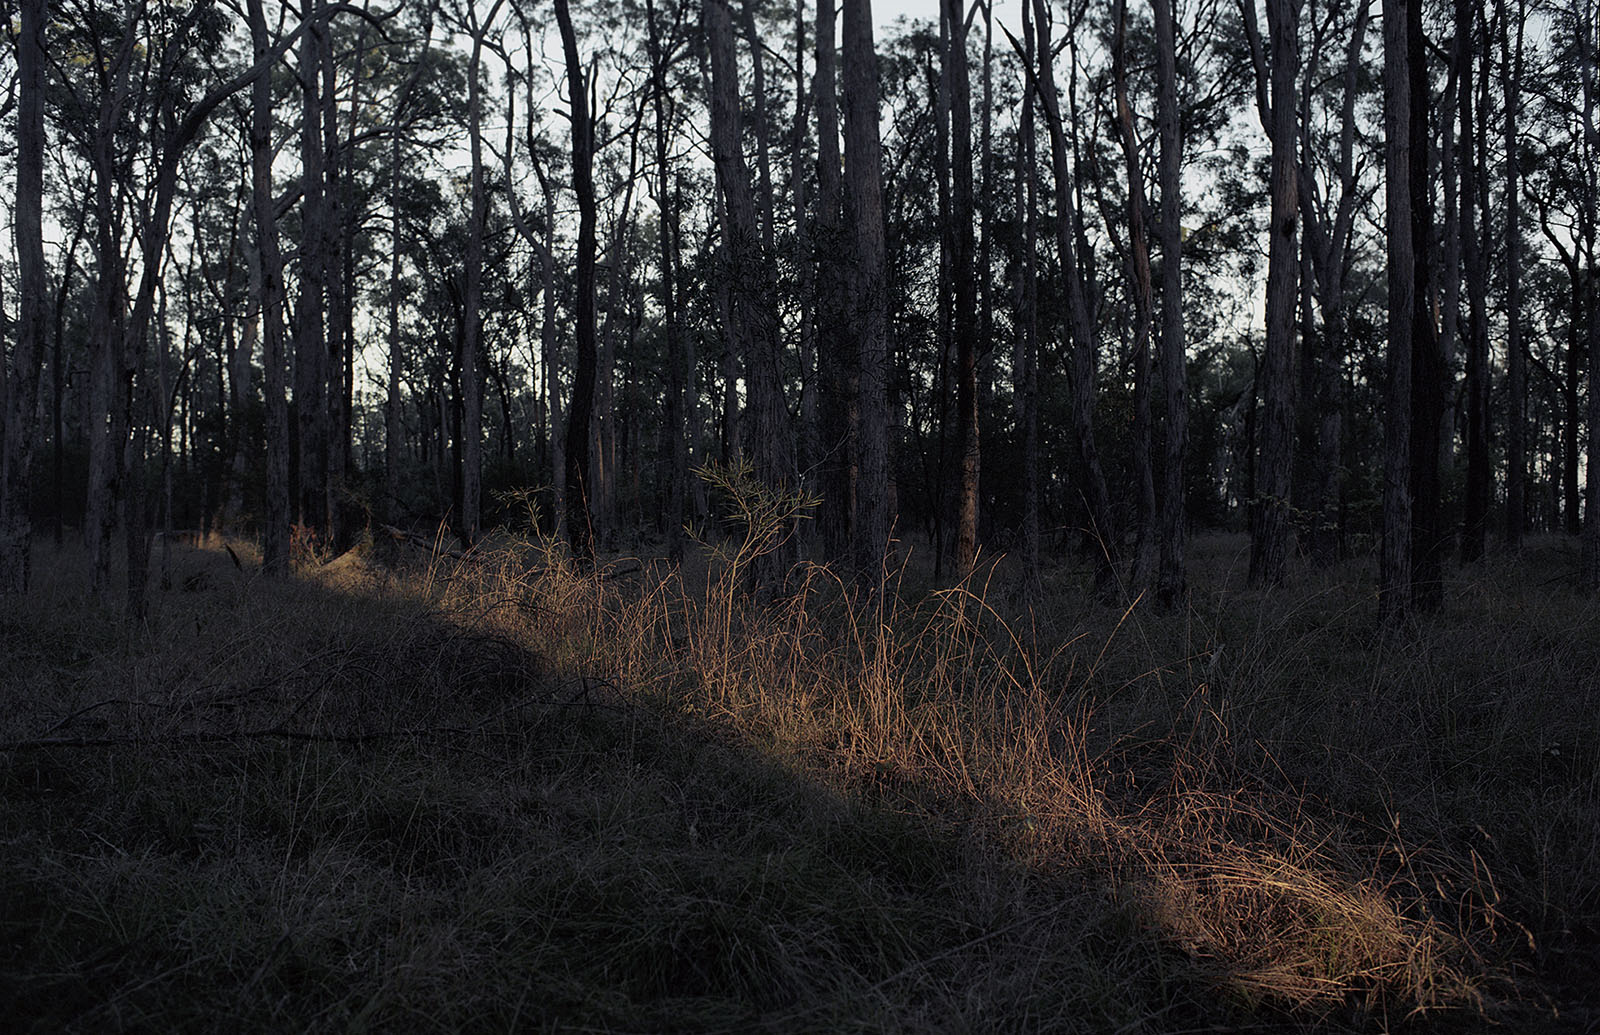 Landscape photography shot in Australia by Namiko Kitaura